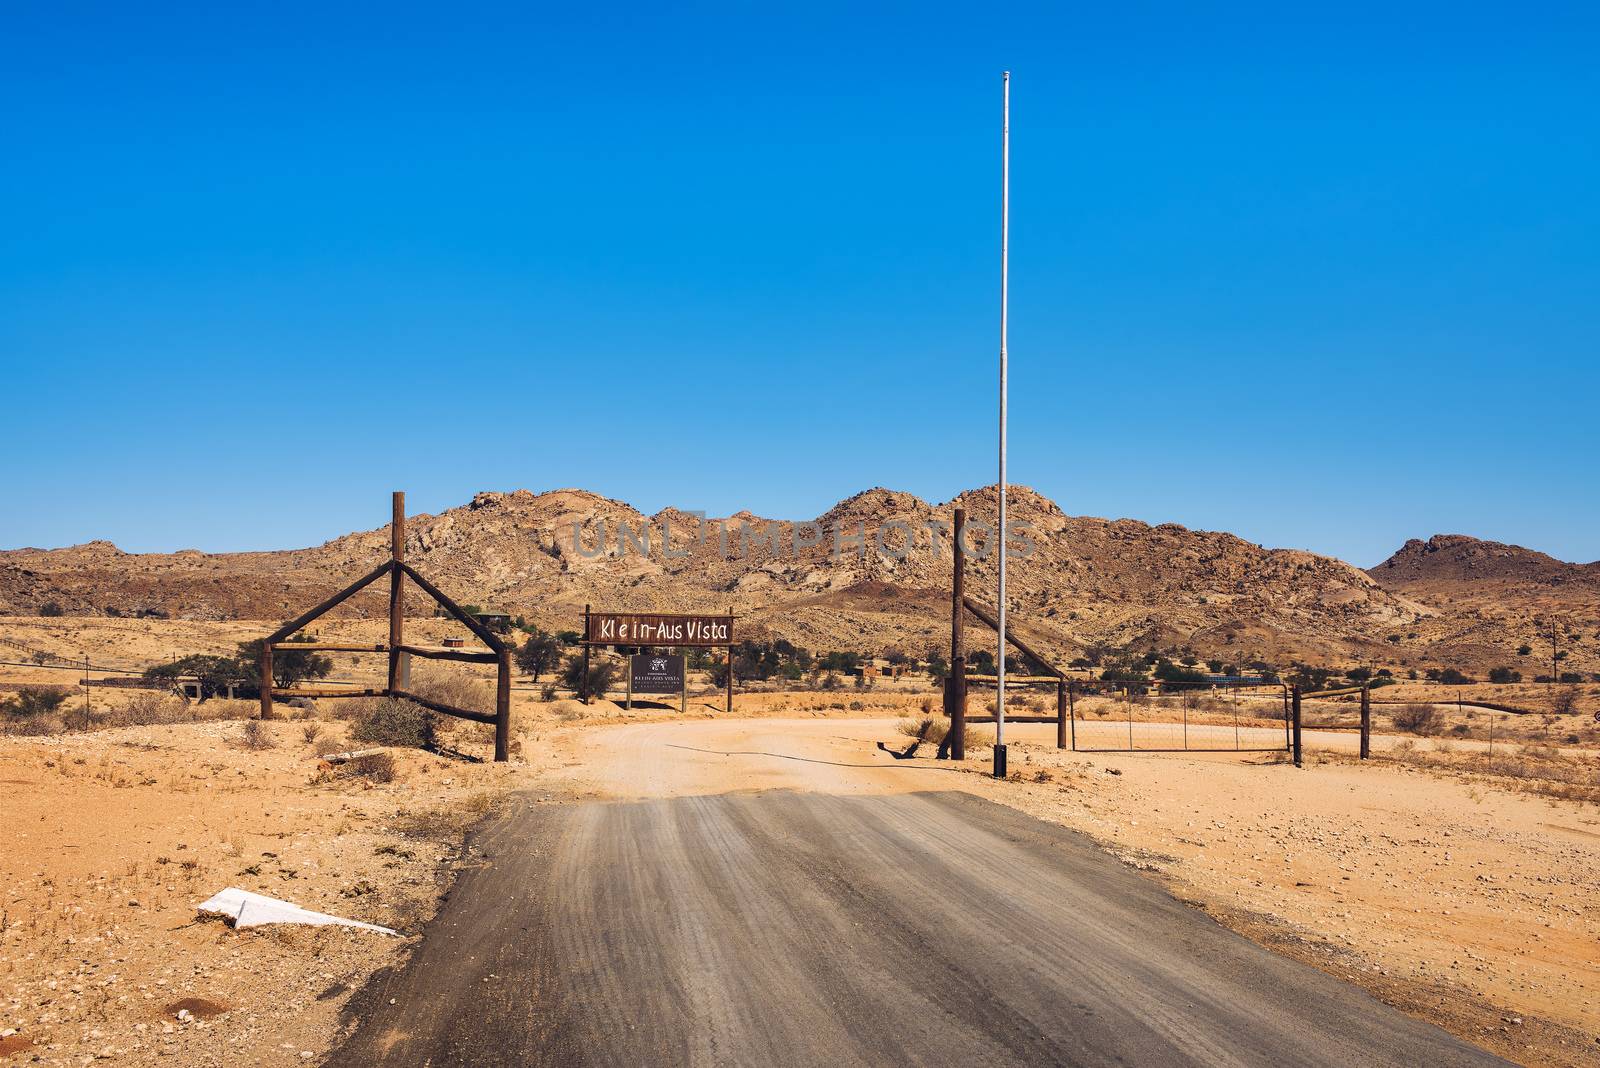 Klein Aus, Namibia - March 27, 2019 : Entry gate to the Klein-Aus Vista lodge and restaurant in the Namib desert.